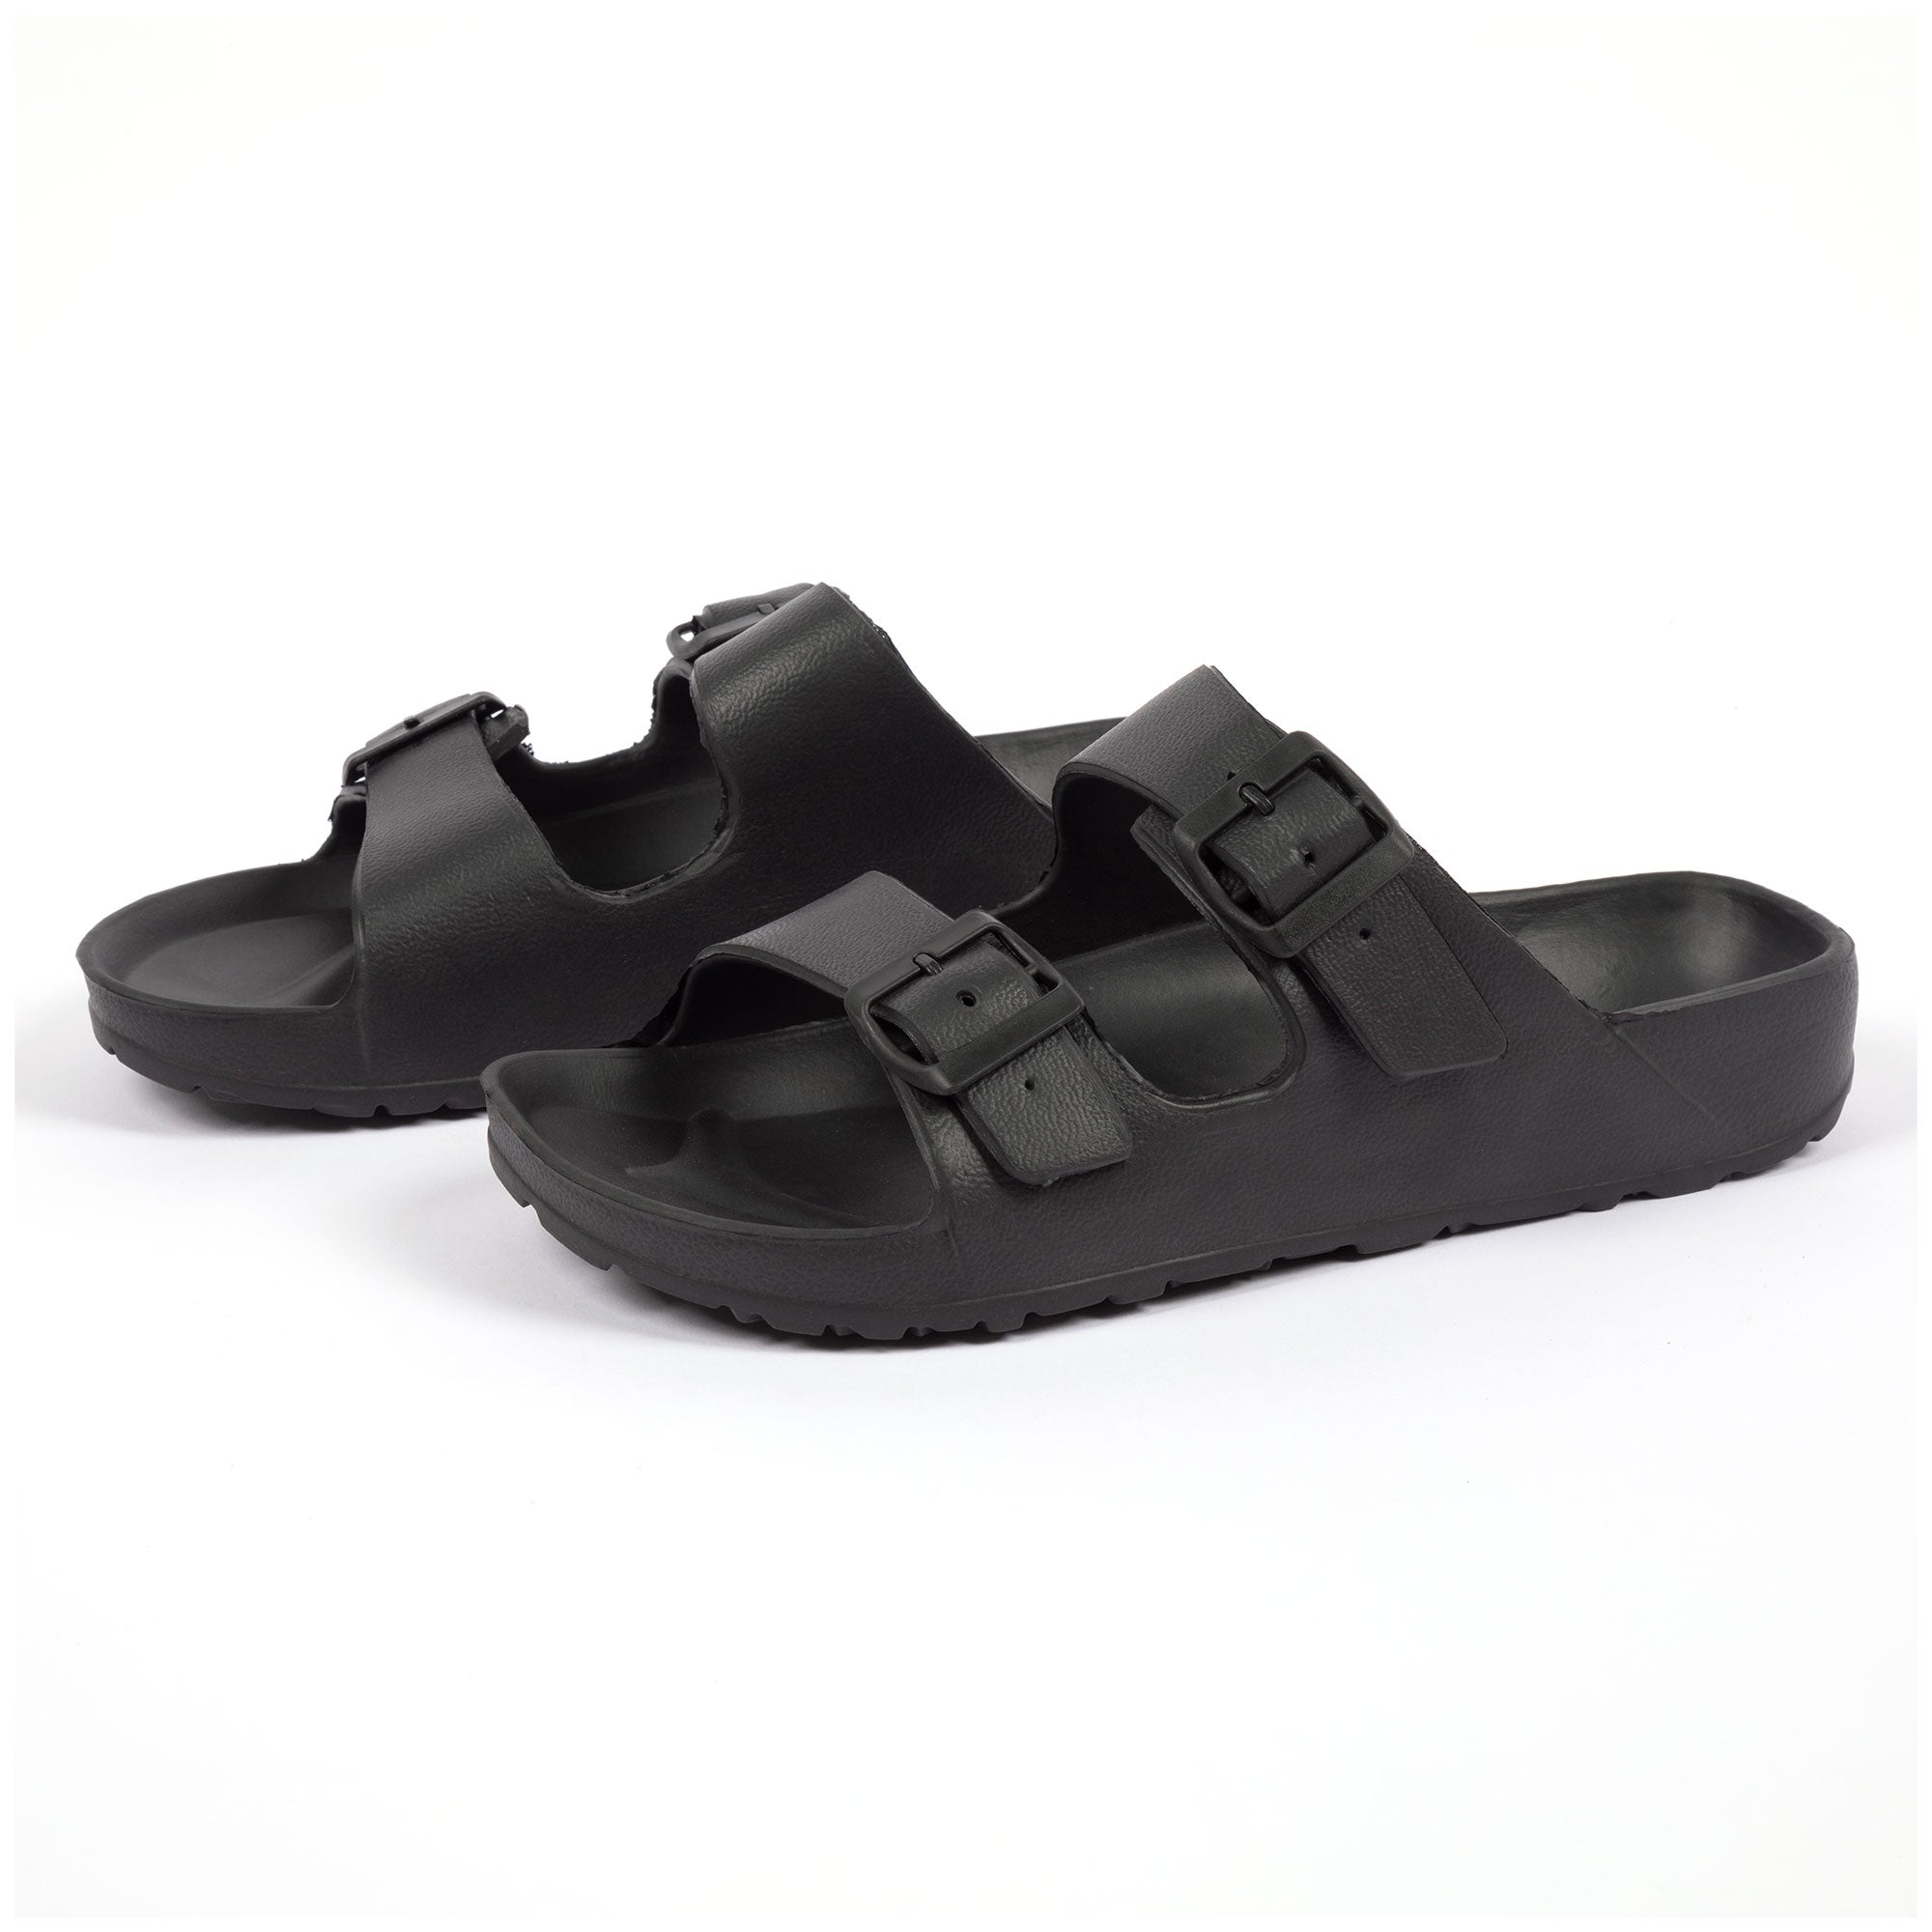 Men's Double Buckle Slide Sandals - Black - 9